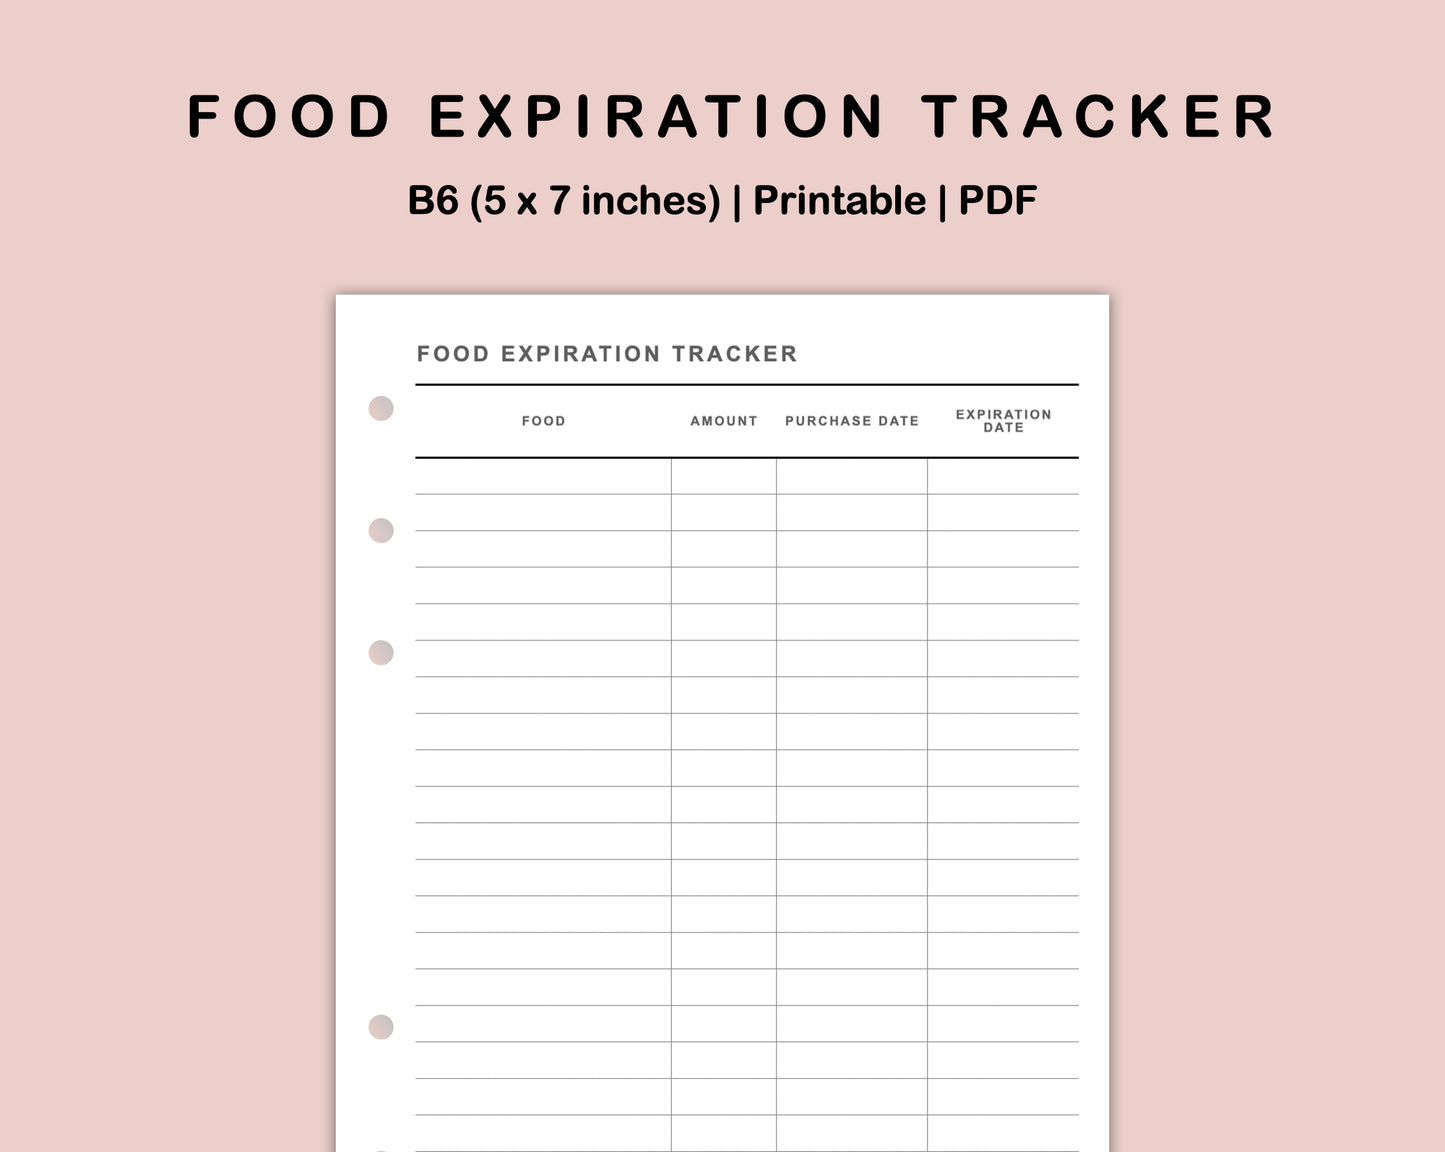 B6 Inserts - Food Expiration Tracker